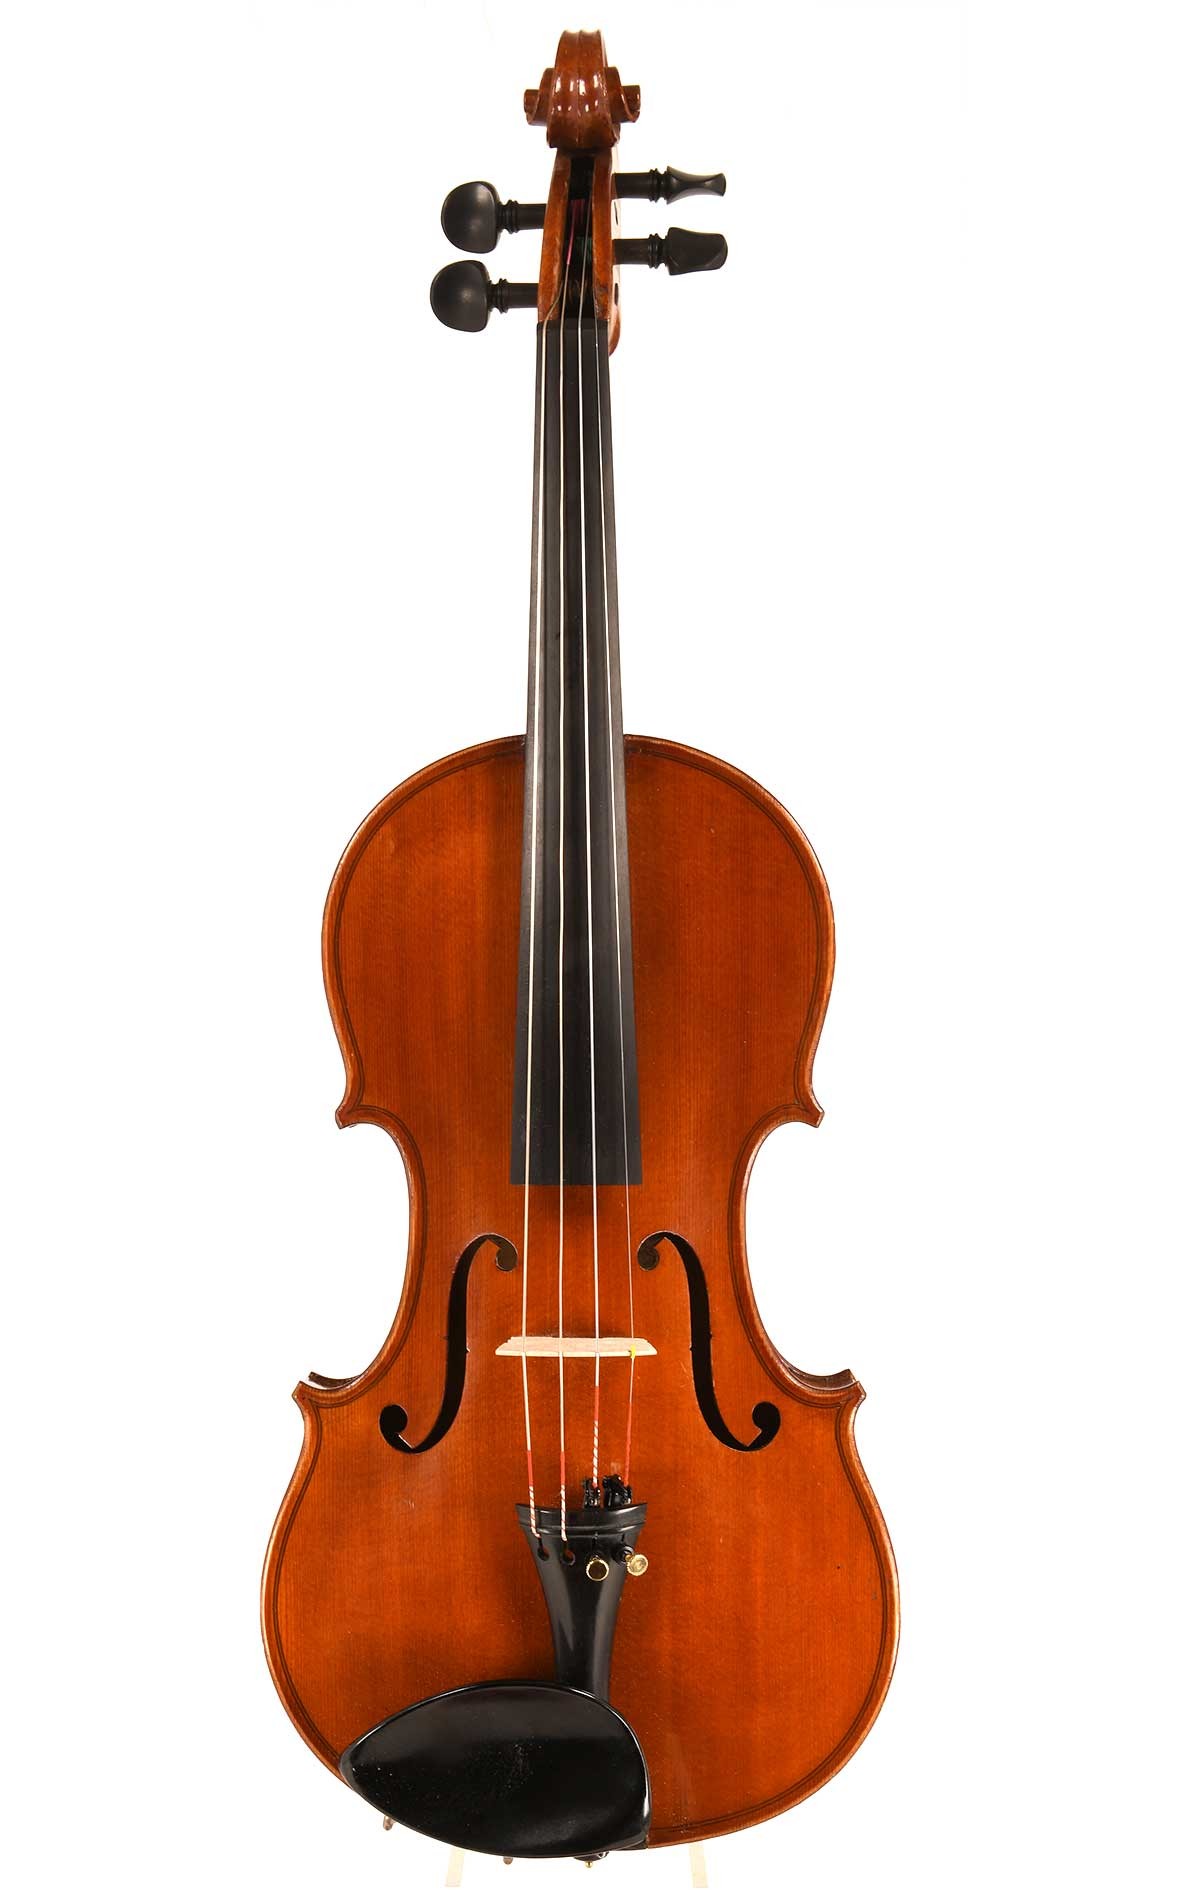 Old French violin c. 1910, after Antonio Stradivari (Laberte)